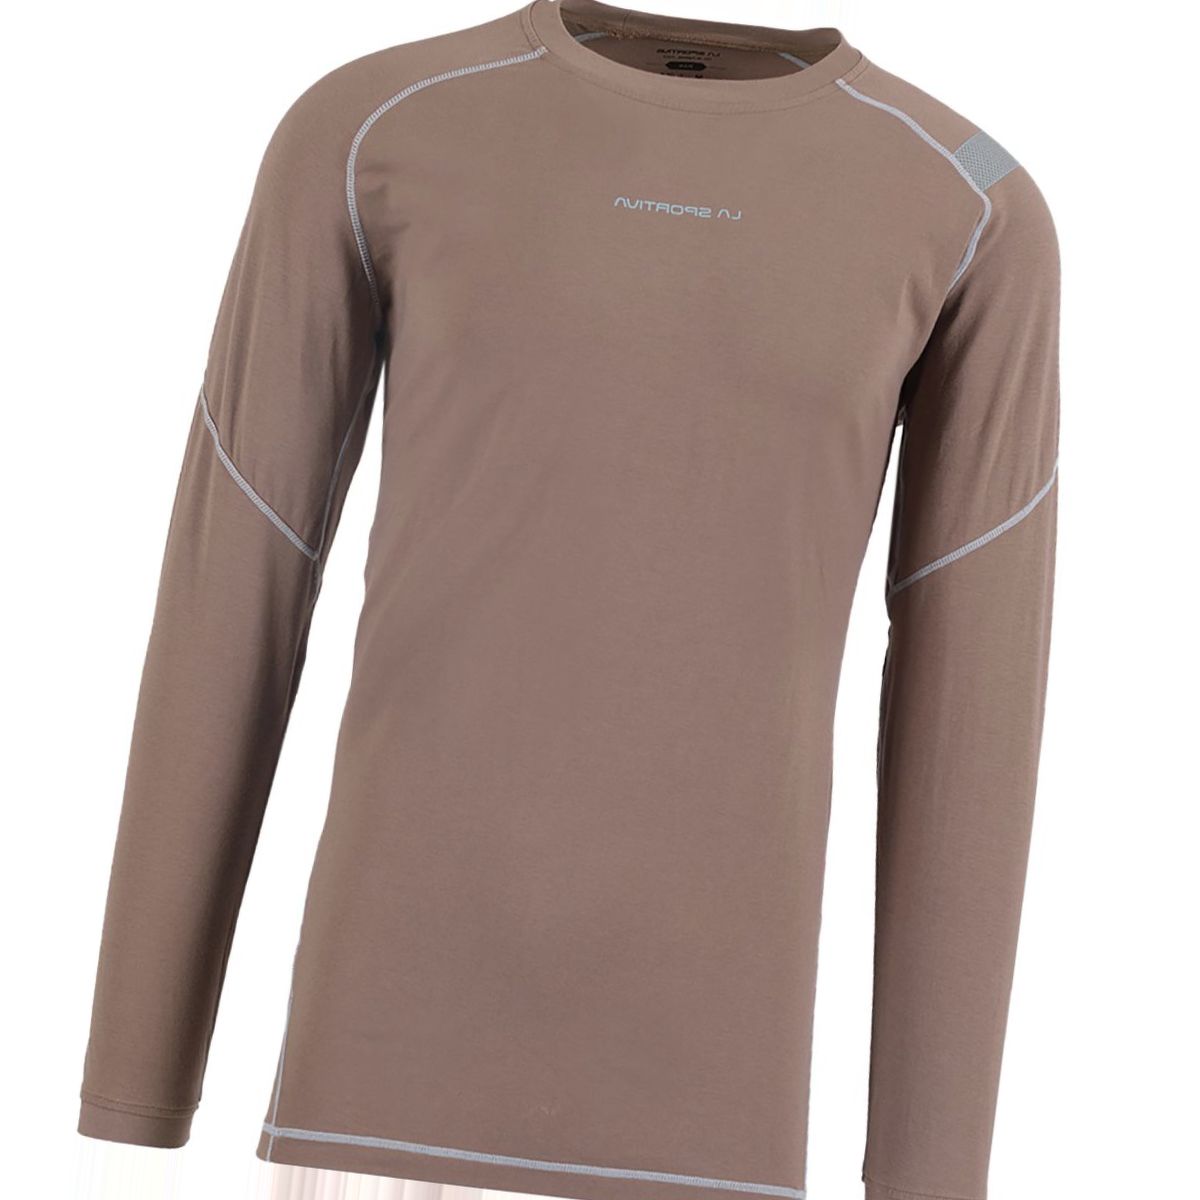 La Sportiva Future Long-Sleeve T-Shirt - Men's